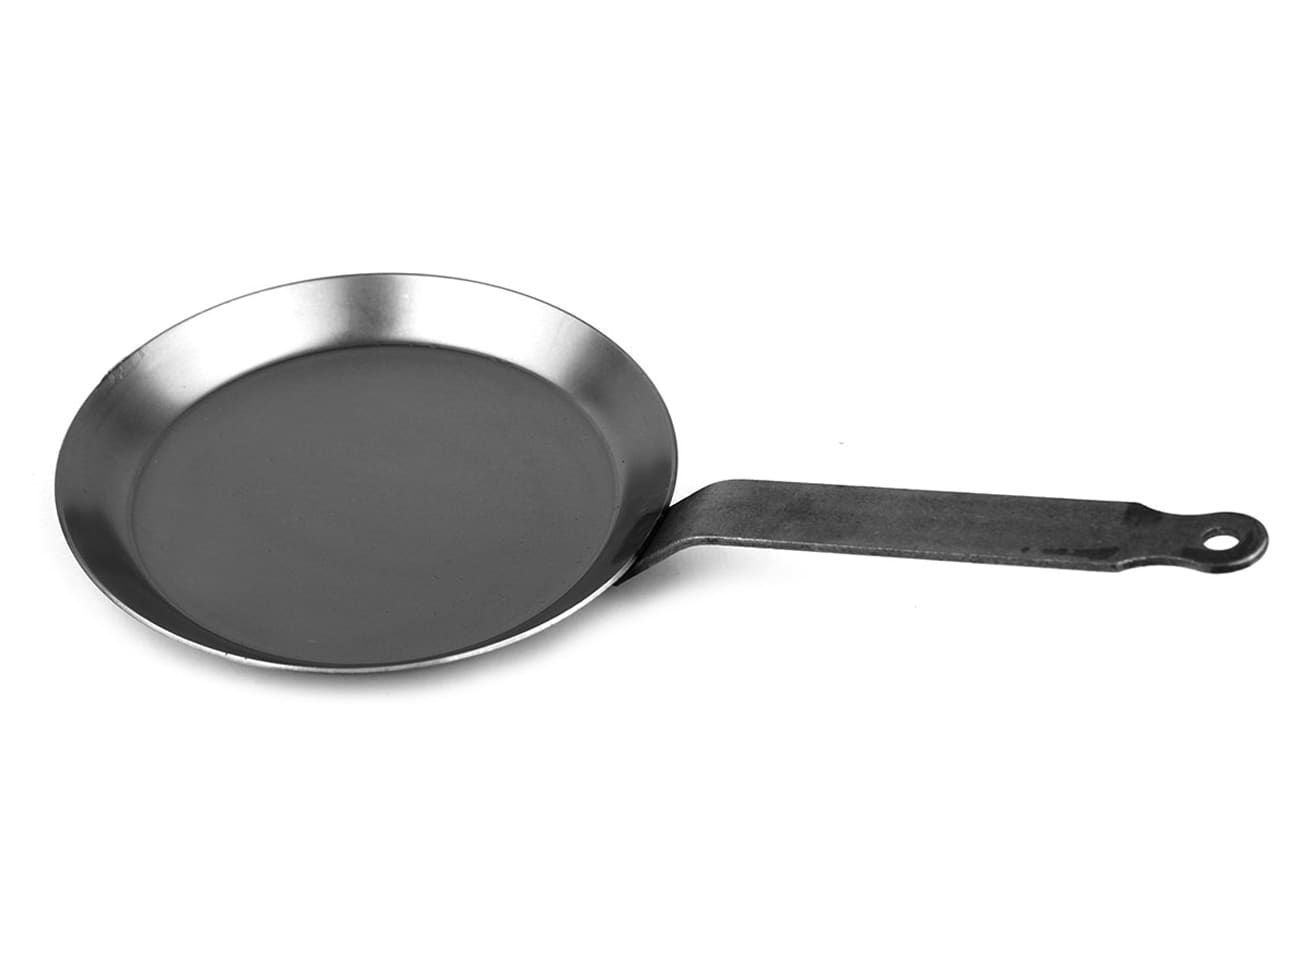 Bourgeat Black Steel Round Crepe Pan With Iron Handle (Matfer Bourgeat)